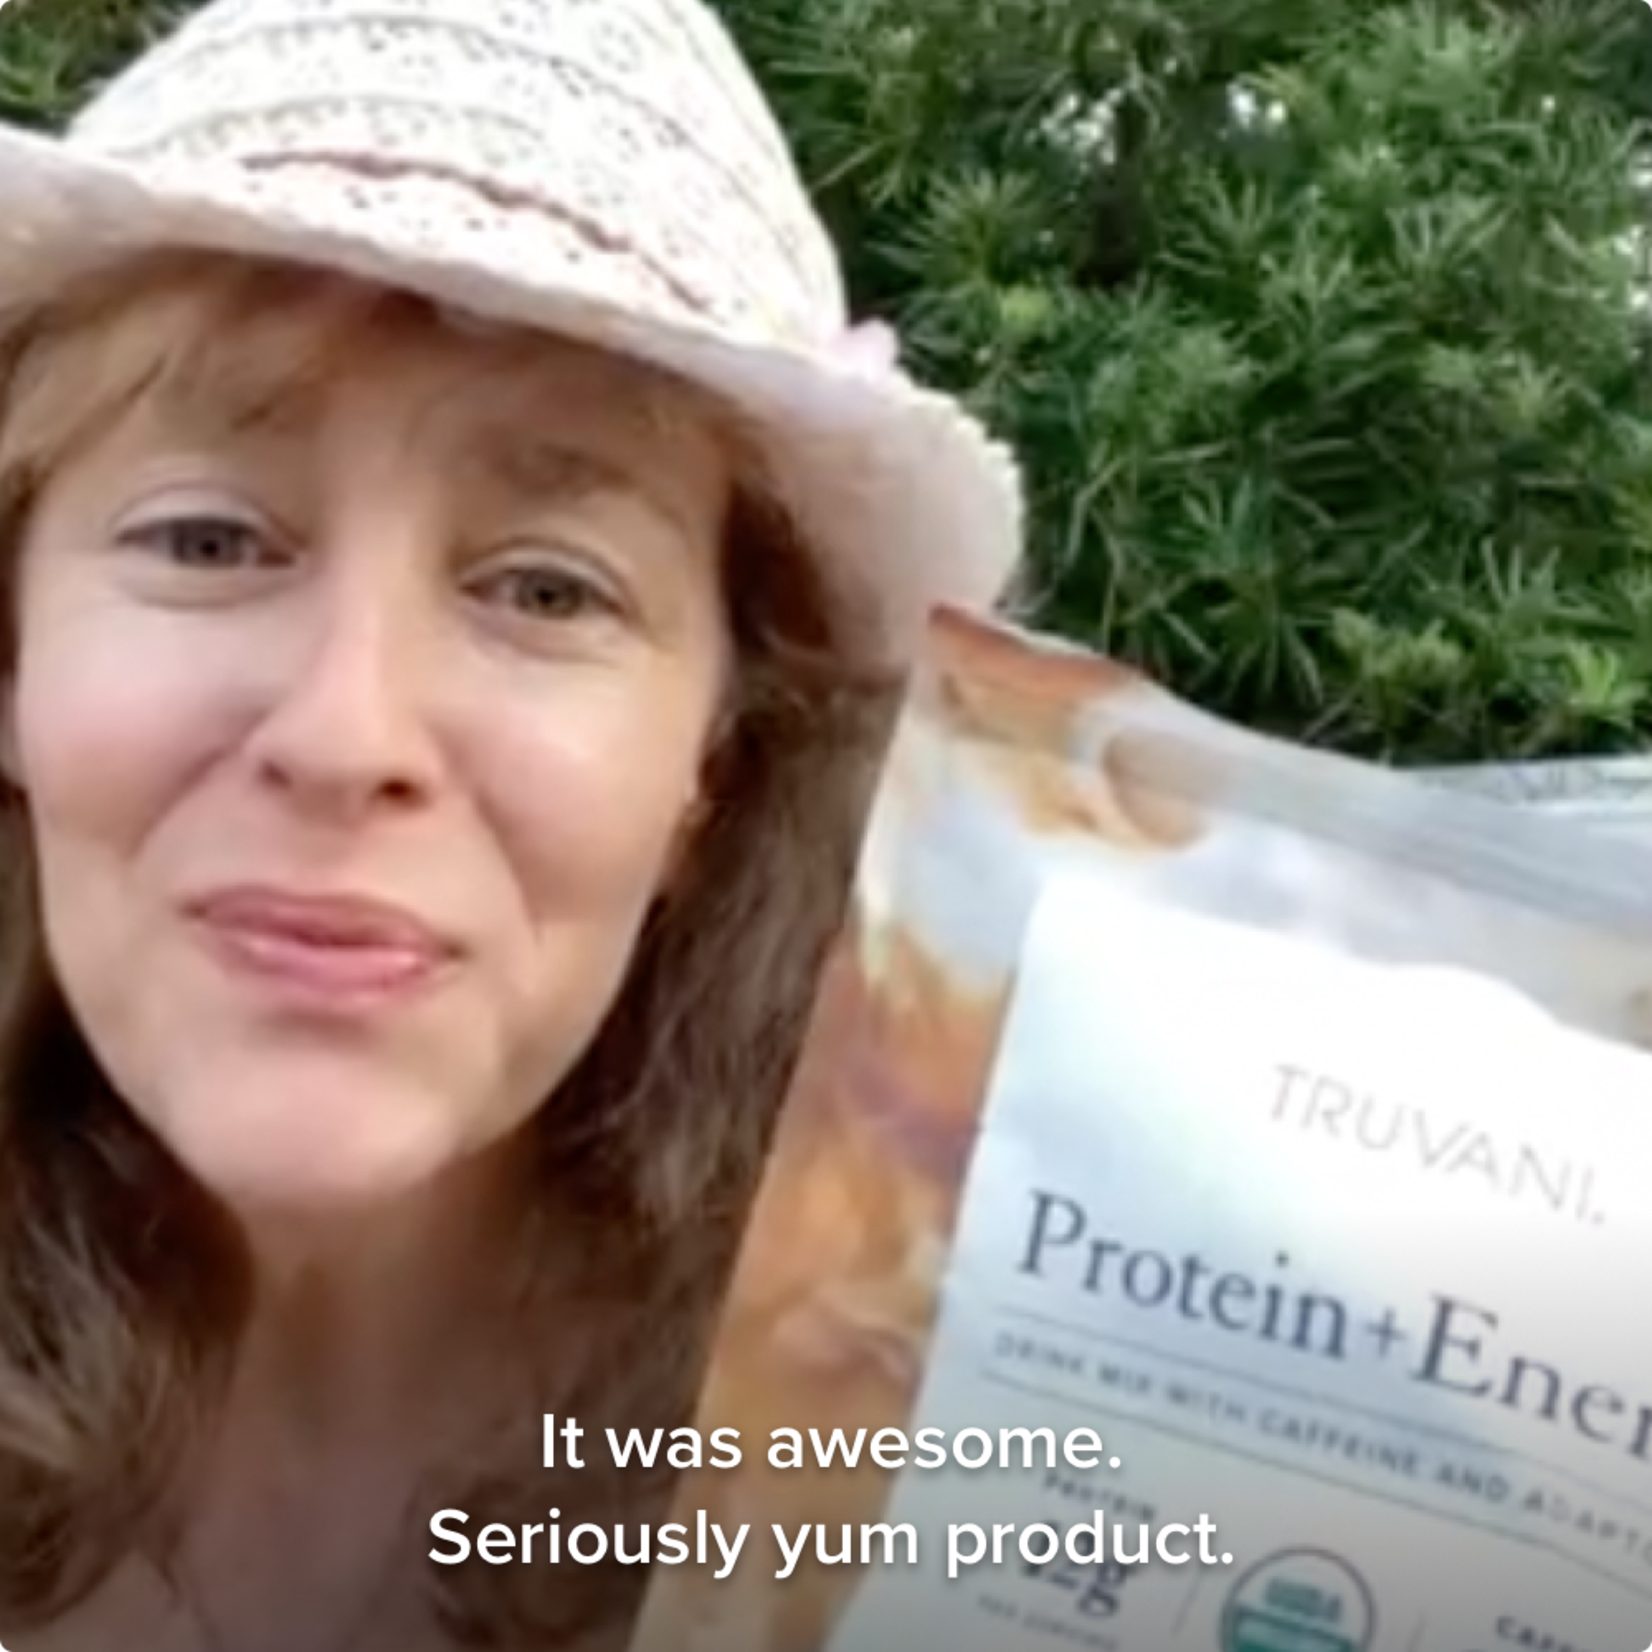 Truvani Truvani - Protein & Energy Chocolate Mocha - 17 oz